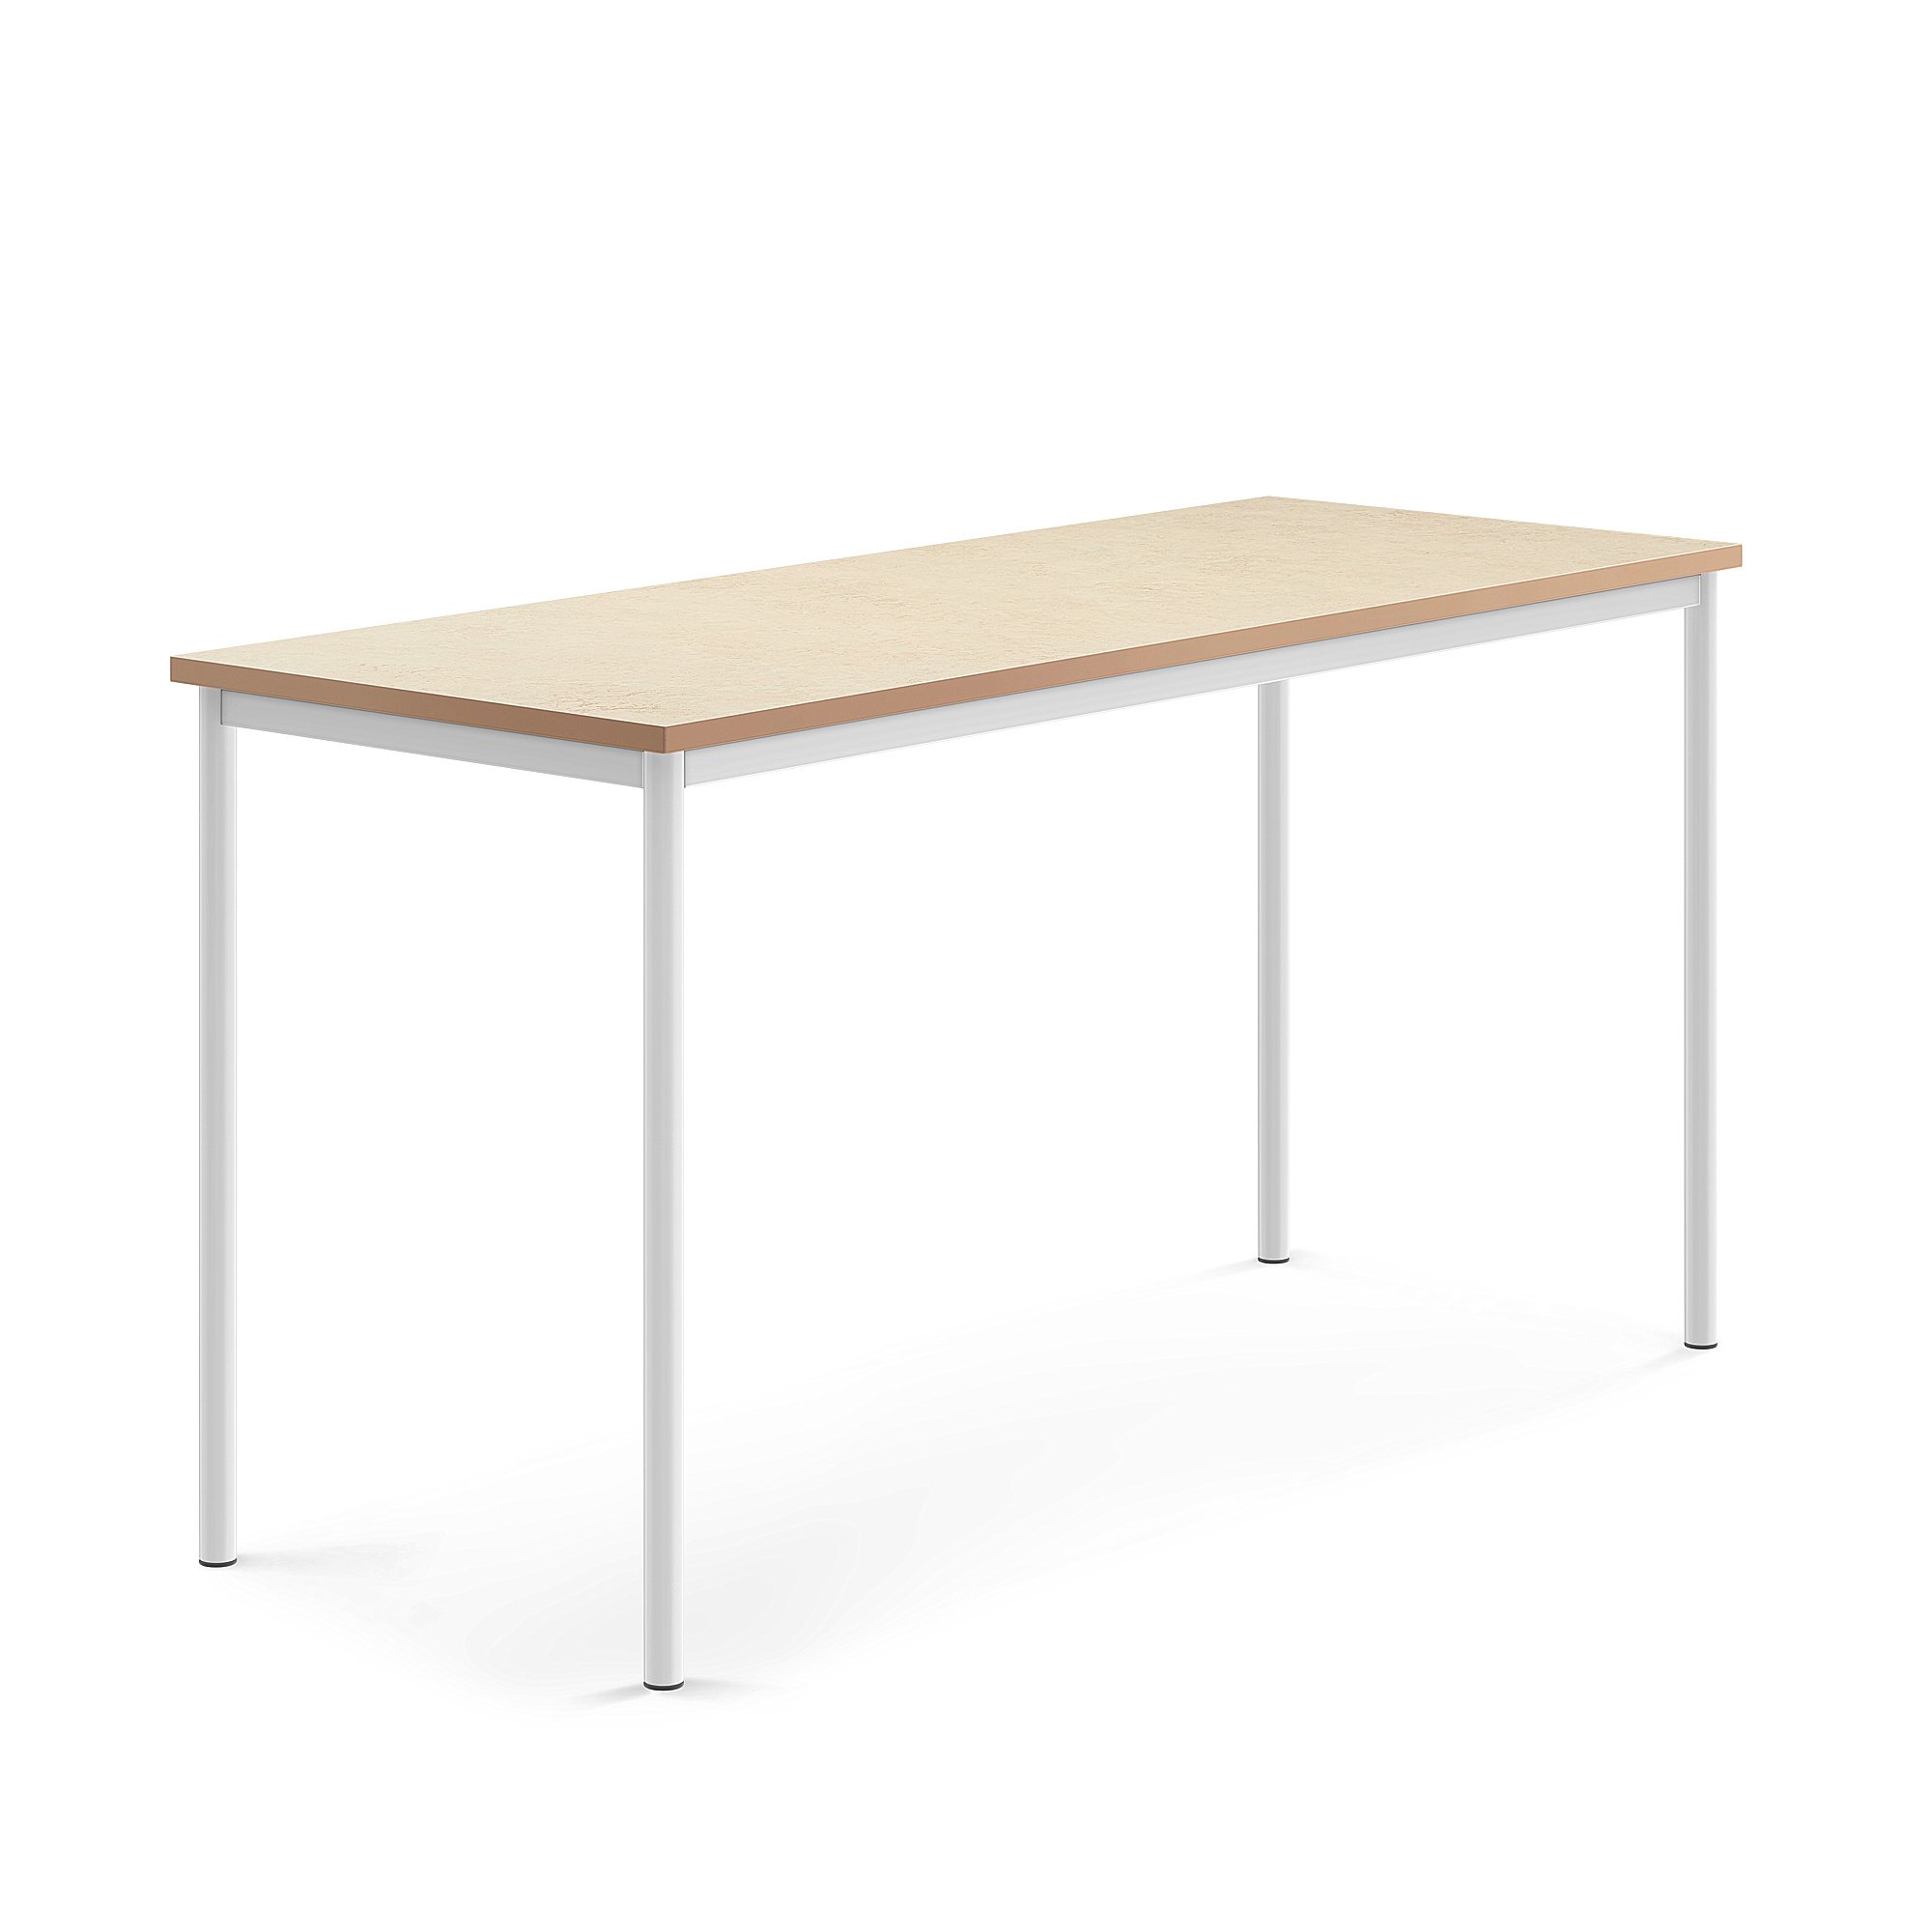 Stůl SONITUS, 1800x700x900 mm, bílé nohy, deska s linoleem, béžová